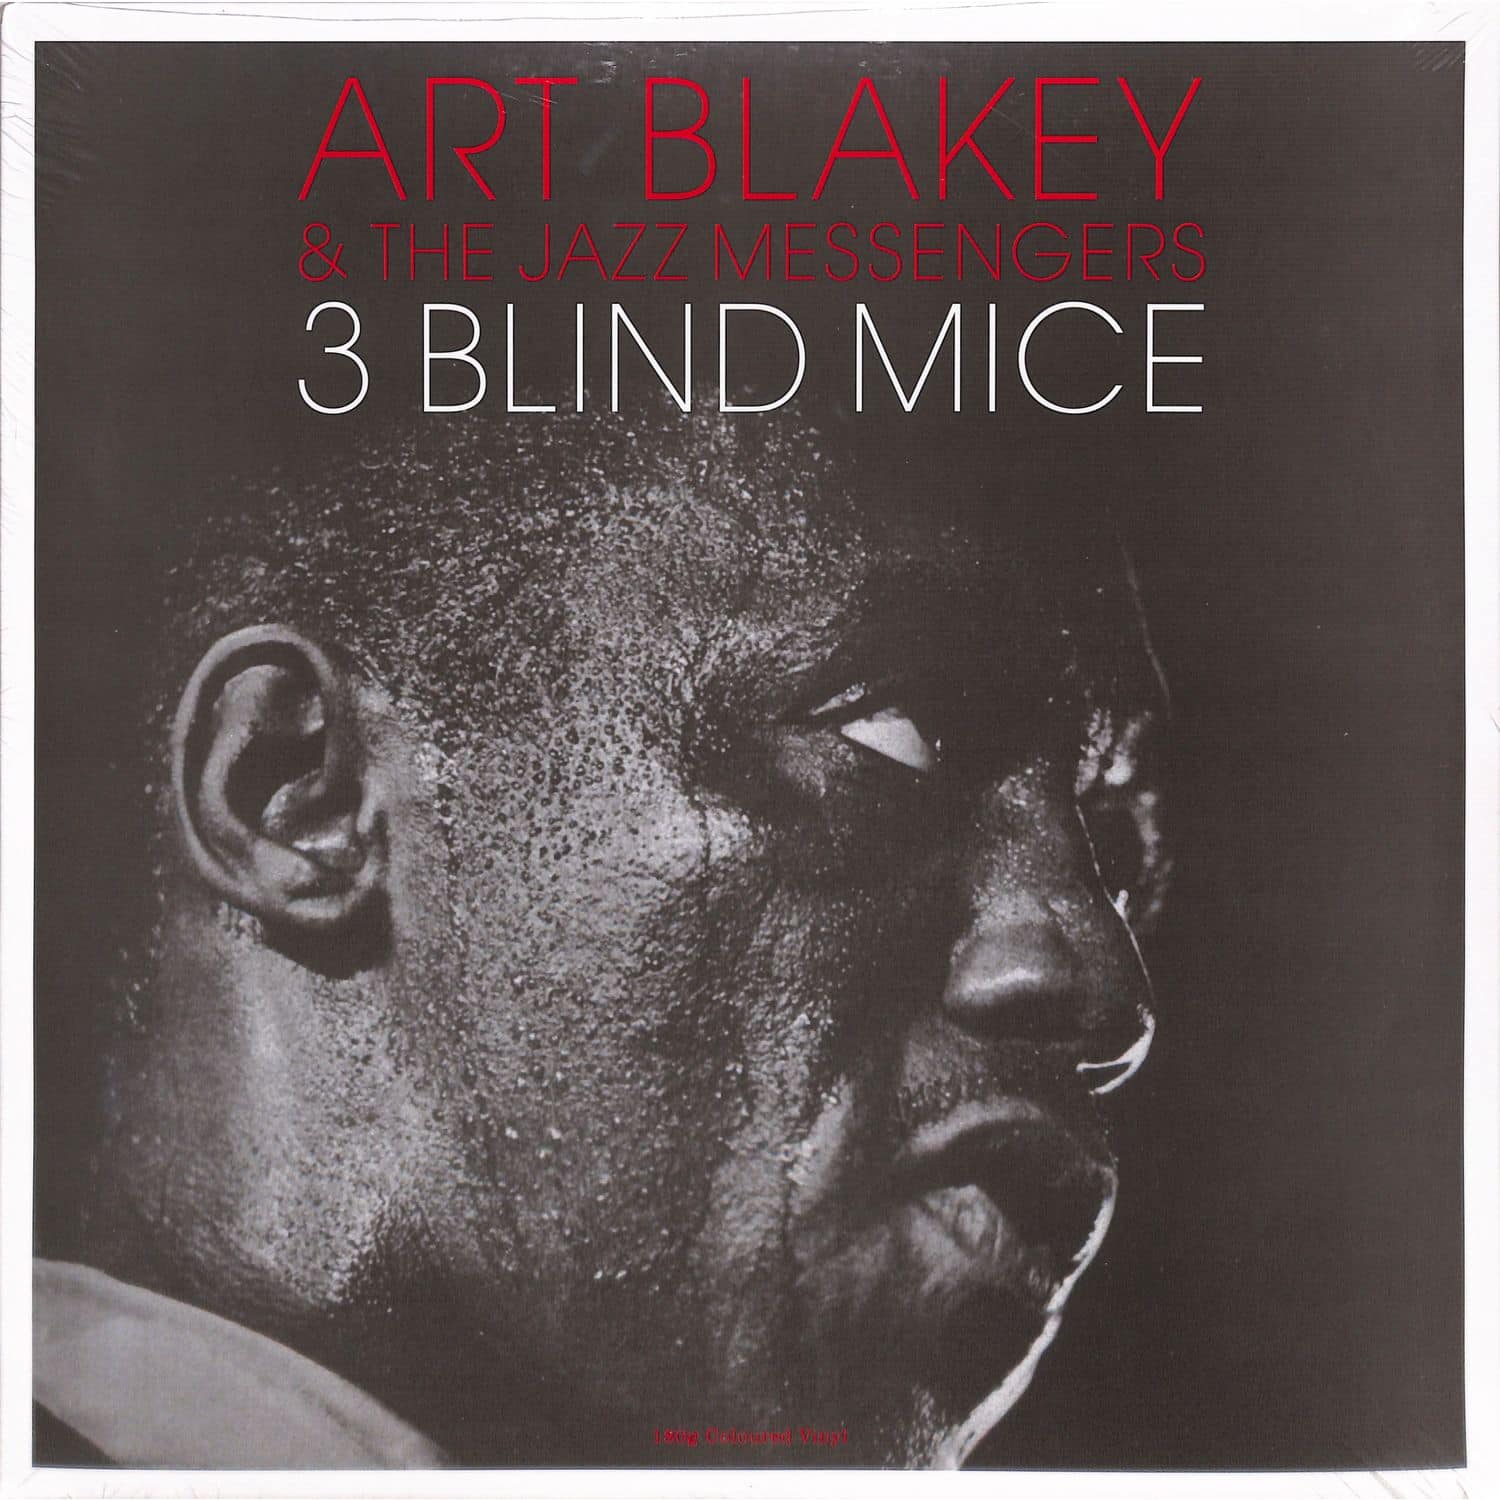 Art Blakey & The Jazz Messengers - 3 BLIND MICE 